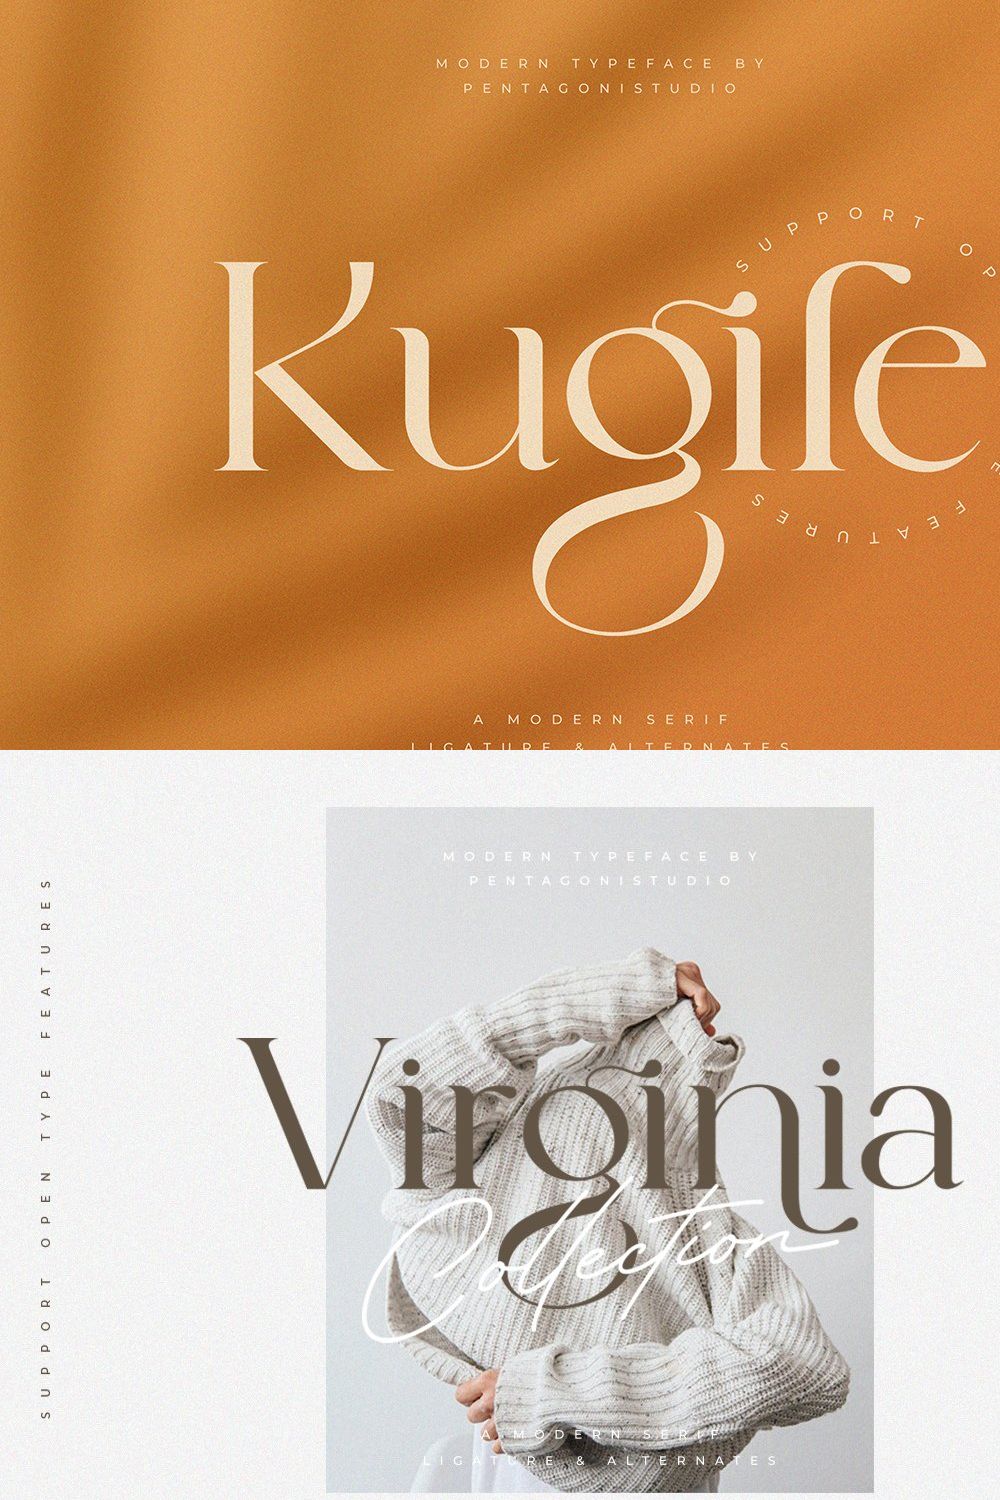 Kugile | Classy Serif Font pinterest preview image.